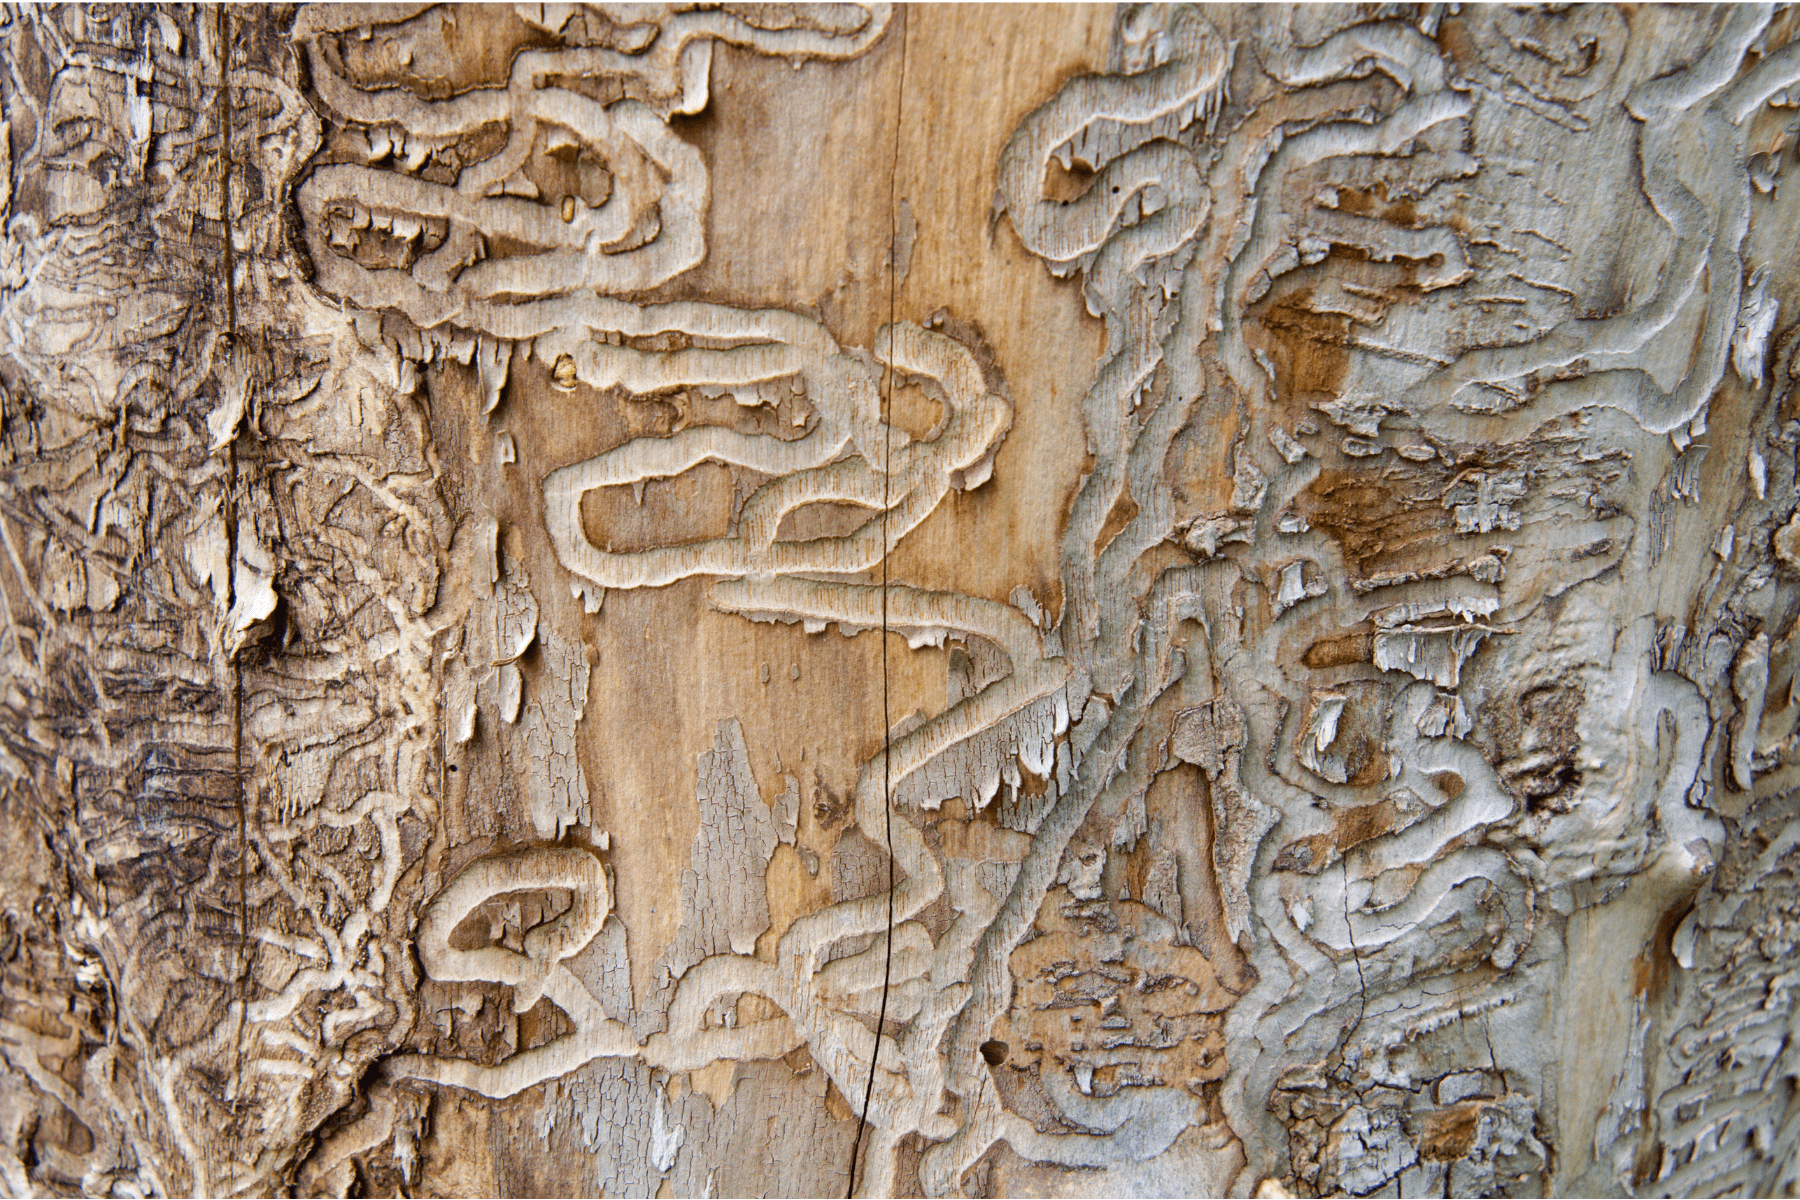 S-Shaped galleries of Emerald ash borer larva.